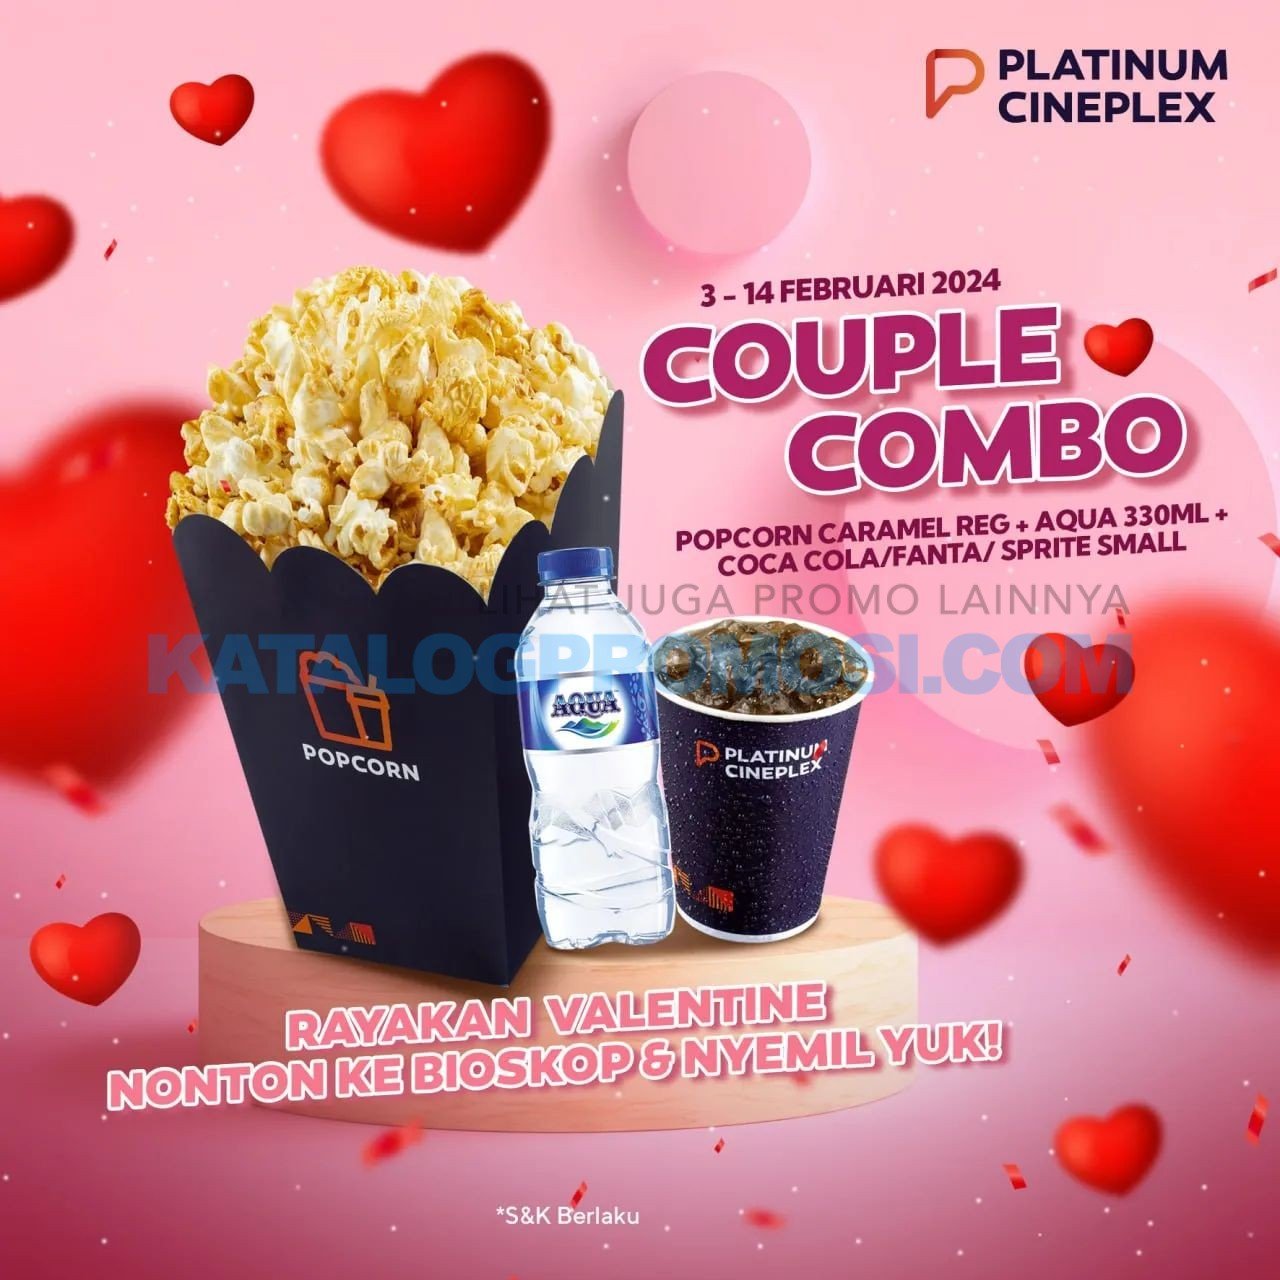 Promo Platinum Cineplex COUPLES COMB, udah dapet 2 minuman dan 1 popcorn loh. Cuan banget!